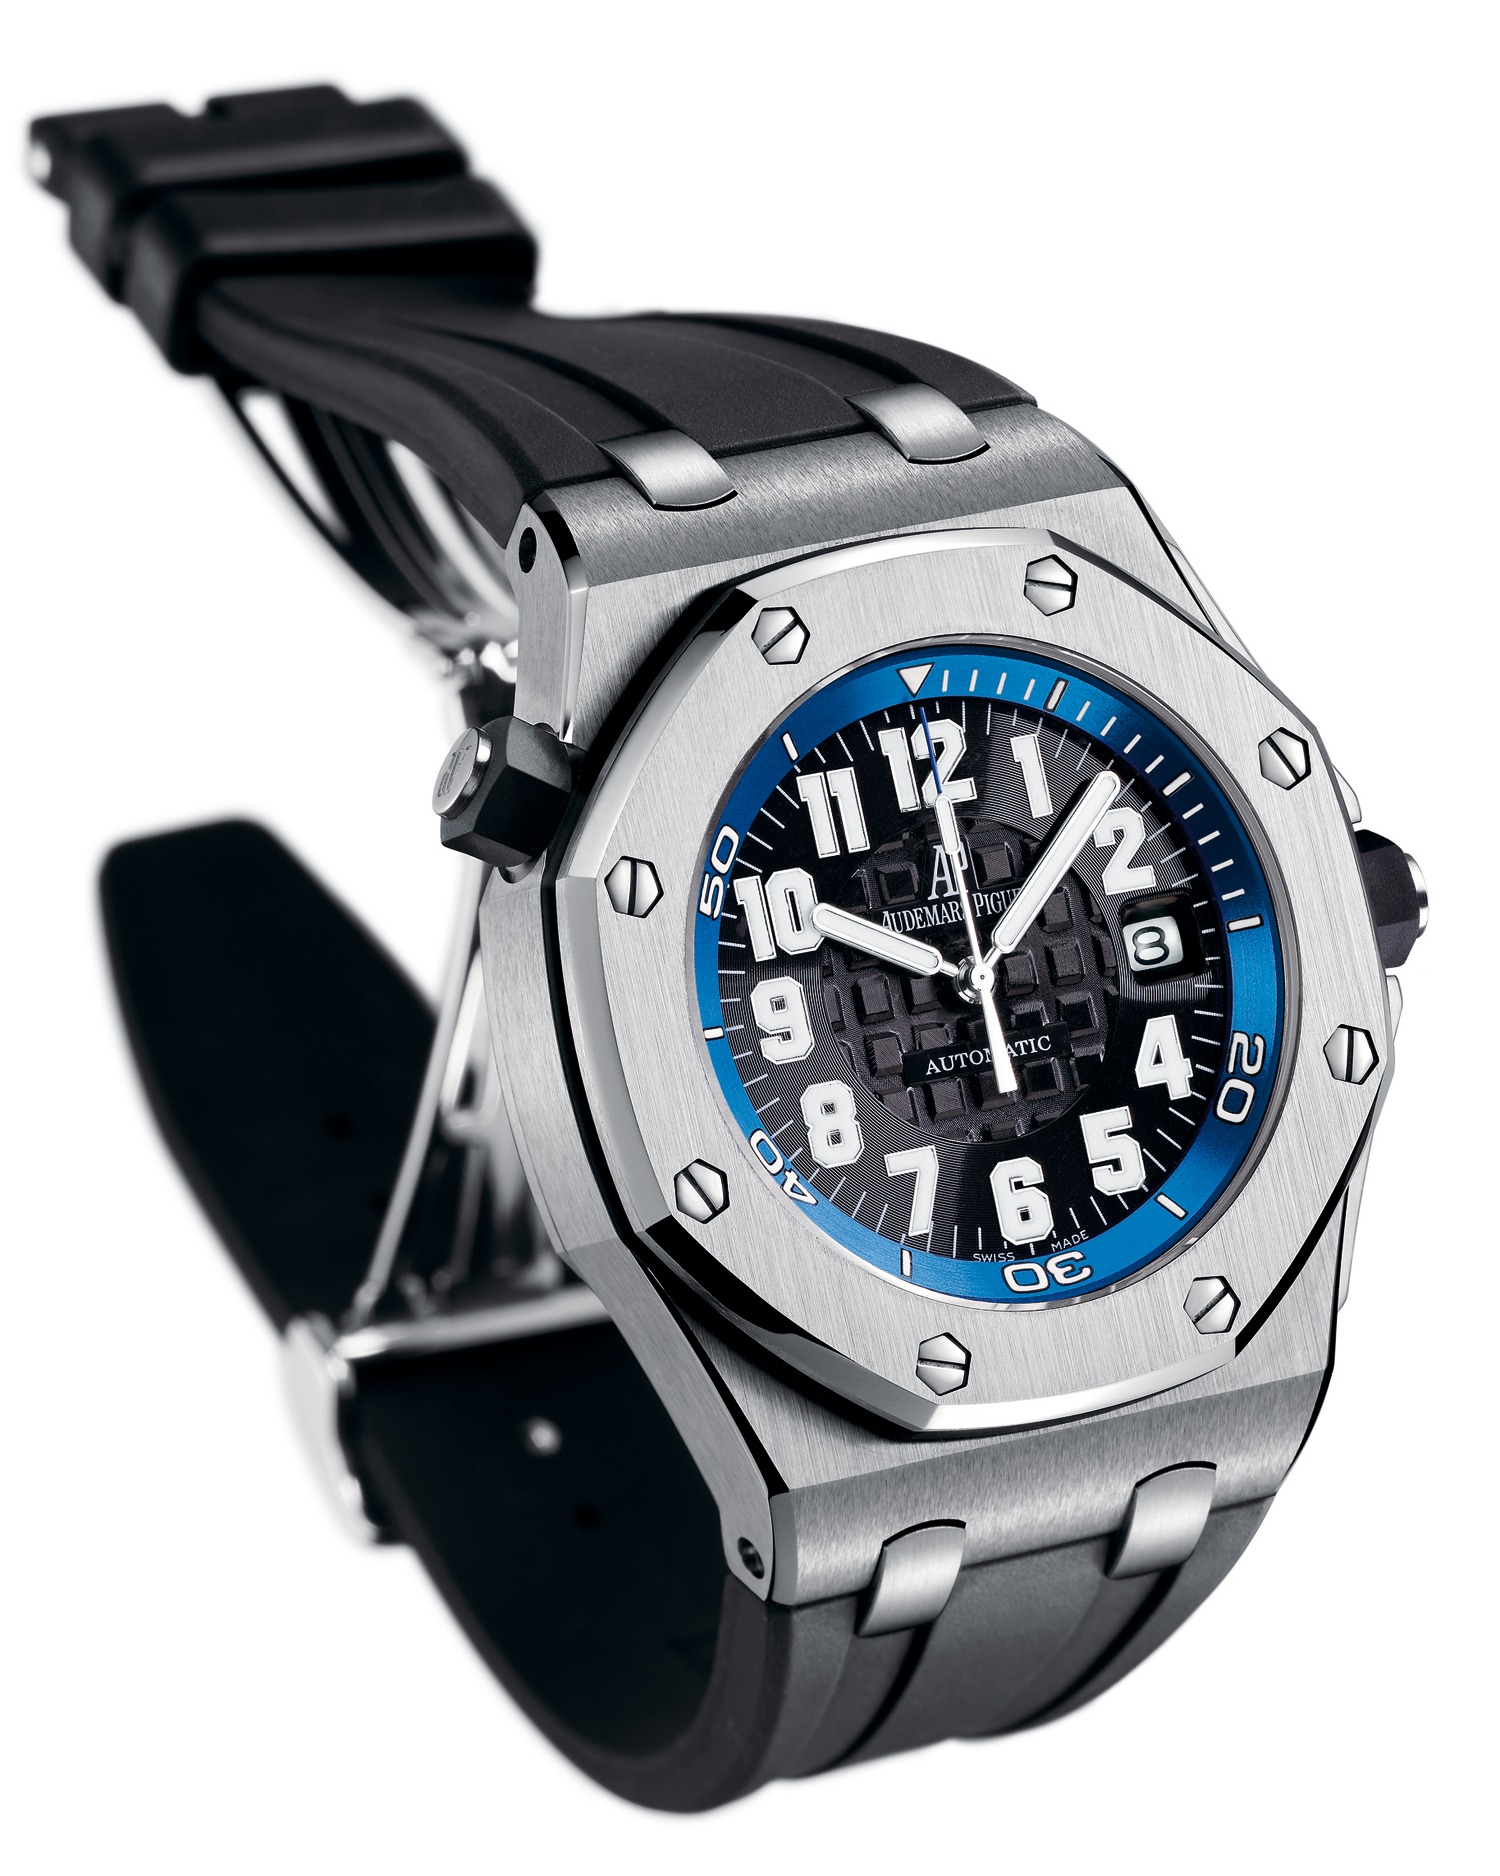 Audemars Piguet Royal Oak Offshore Scuba Boutique Blue Steel watch REF: 15701ST.OO.D002CA.02